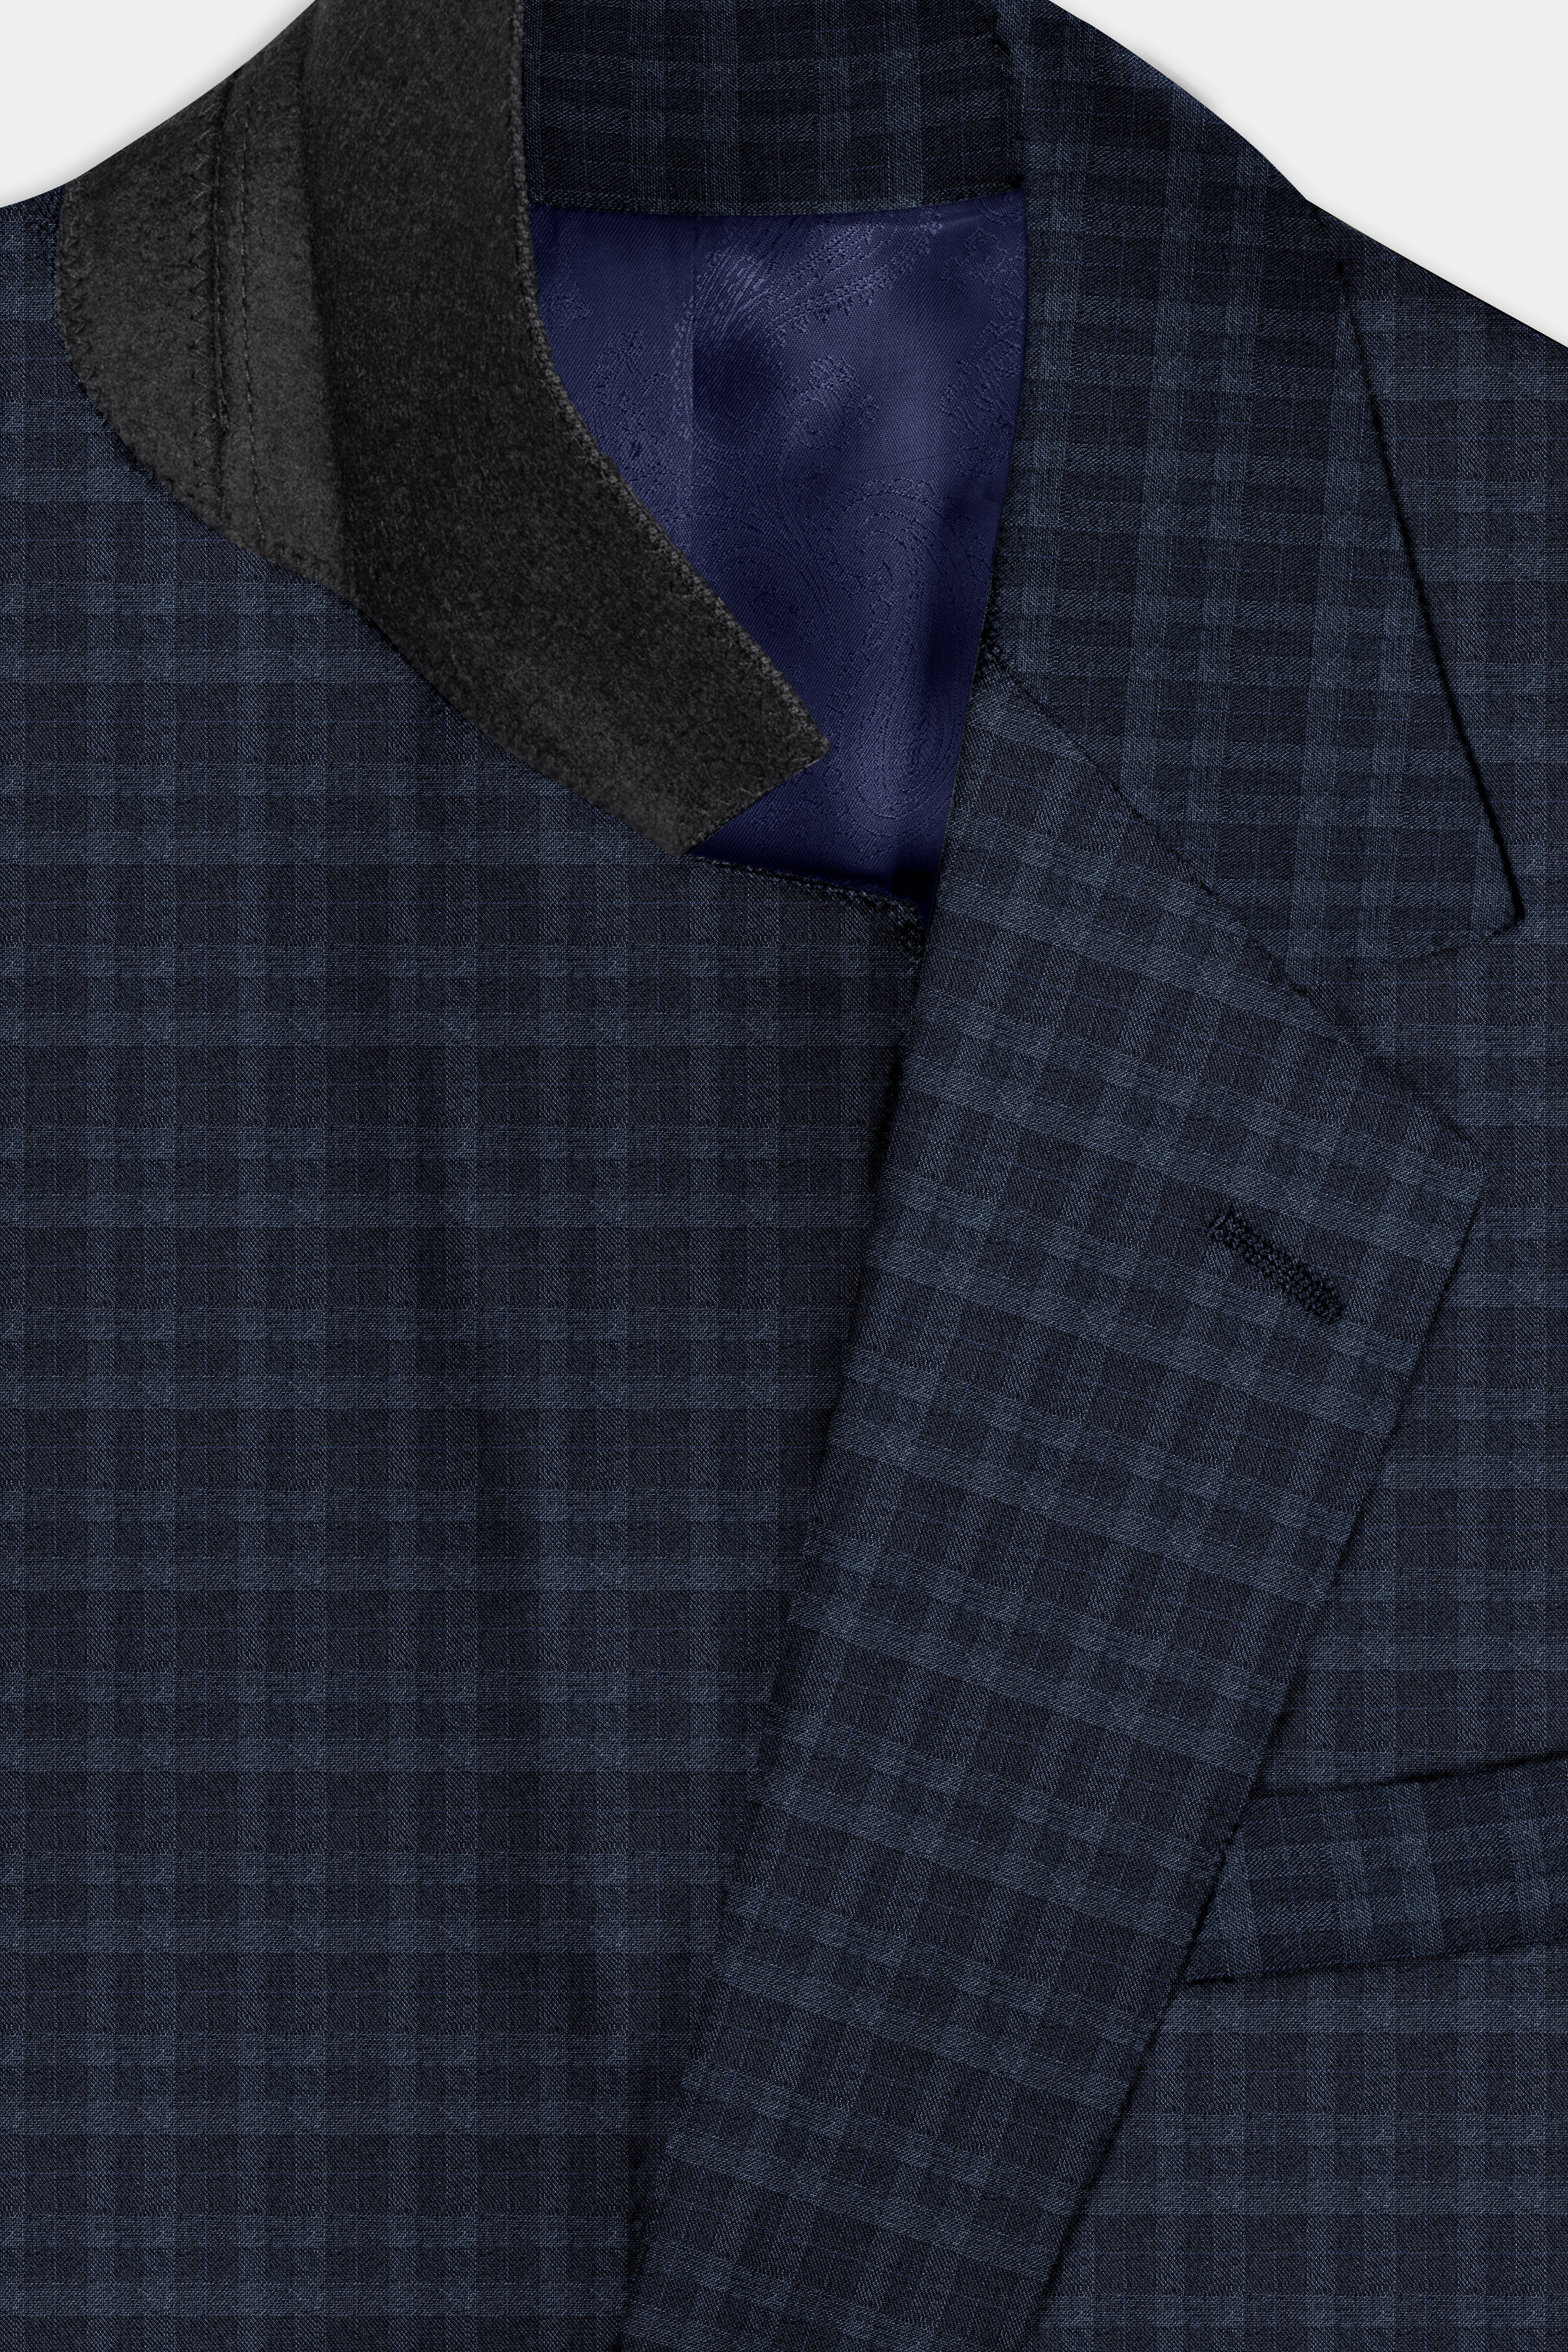 Baltic Blue Windowpane Wool Rich Suit